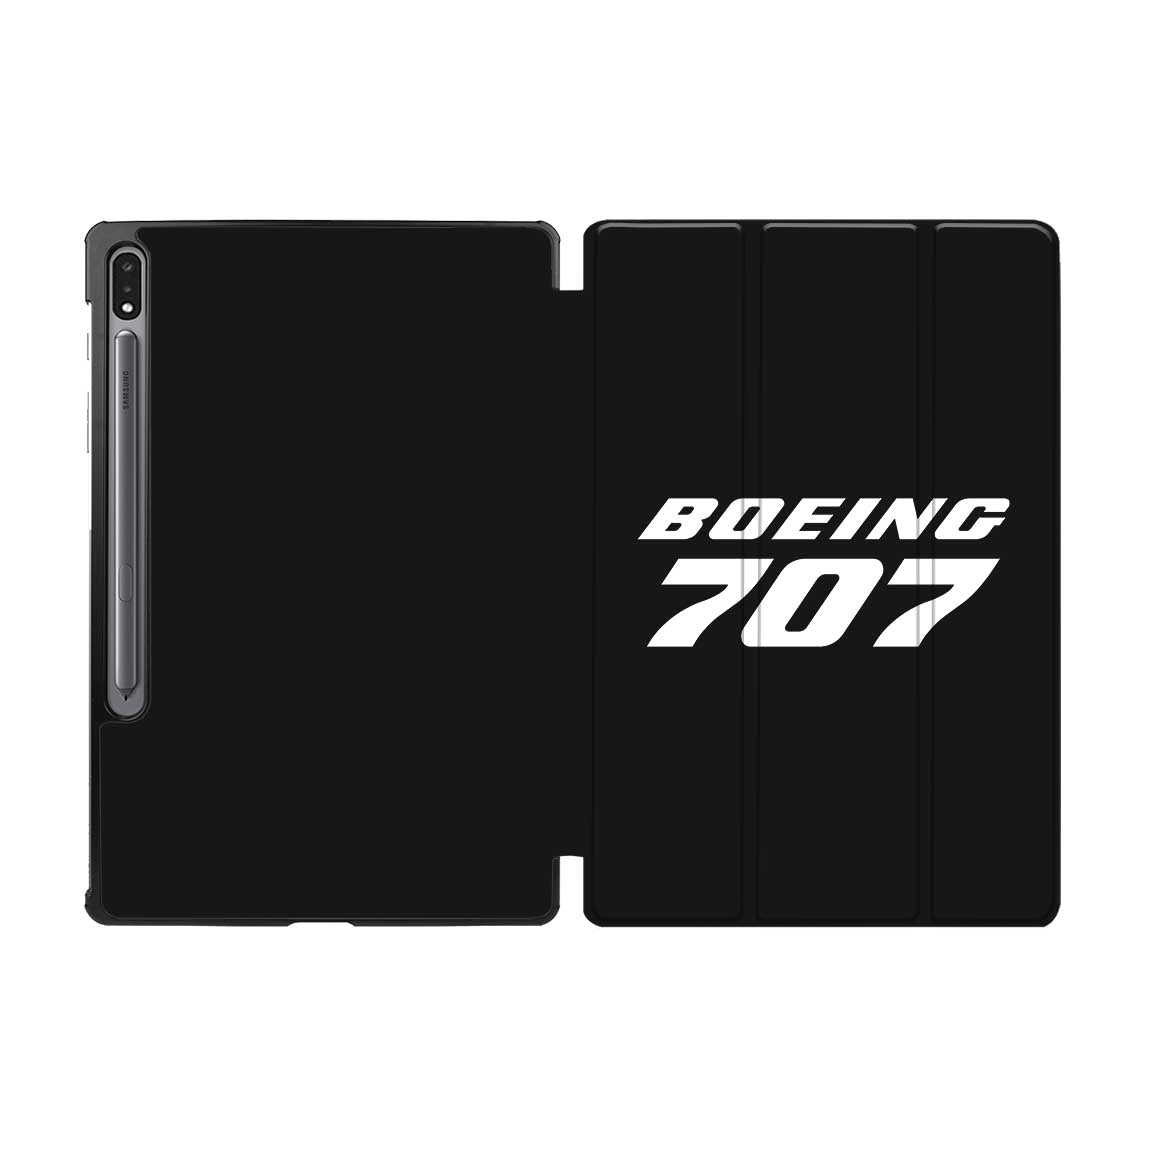 Boeing 707 & Text Designed Samsung Tablet Cases